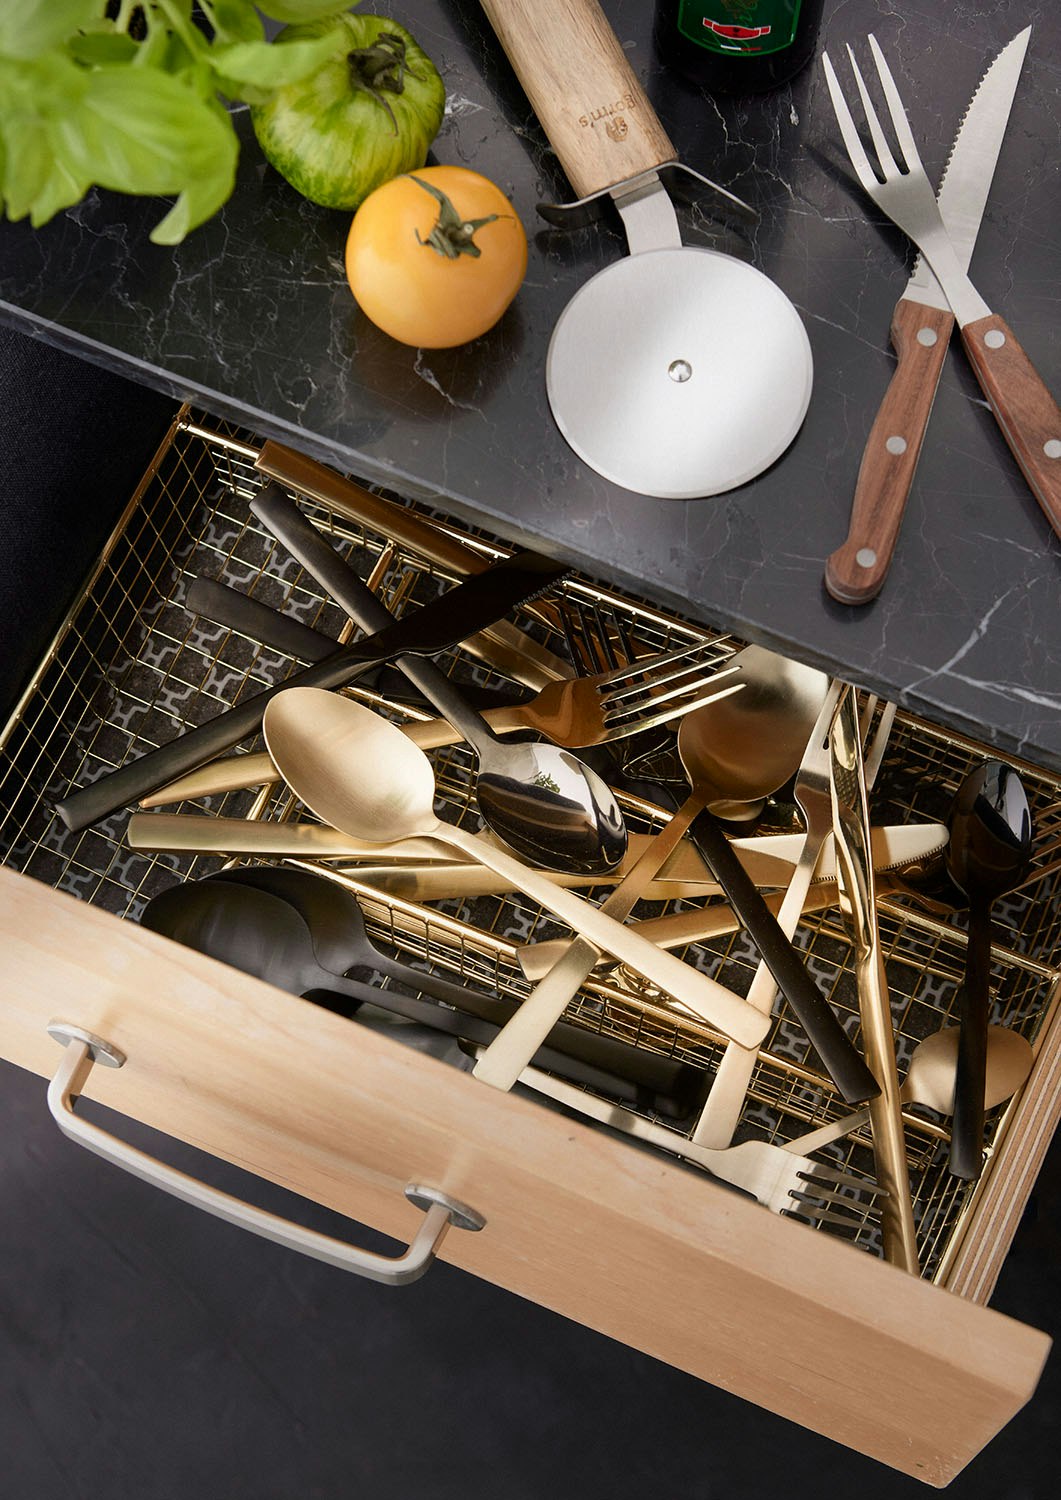 https://royaldesign.com/image/2/bahne-cutlery-s-16-pcs-champagne-gold-mirror-finish-gift-box-3?w=800&quality=80